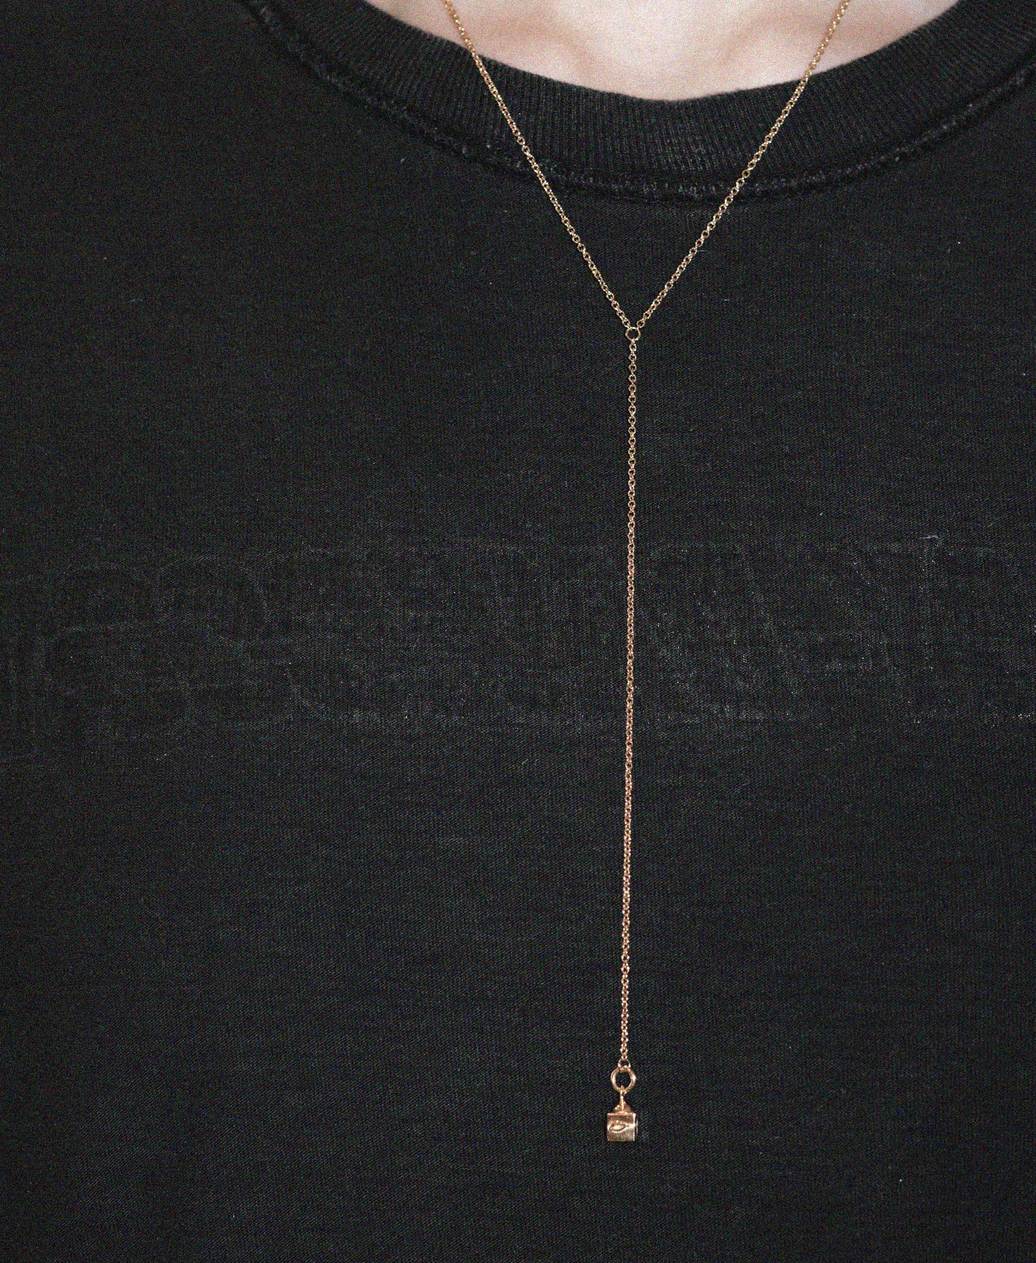 Lumière Lariat Necklace sold by Angel Divine